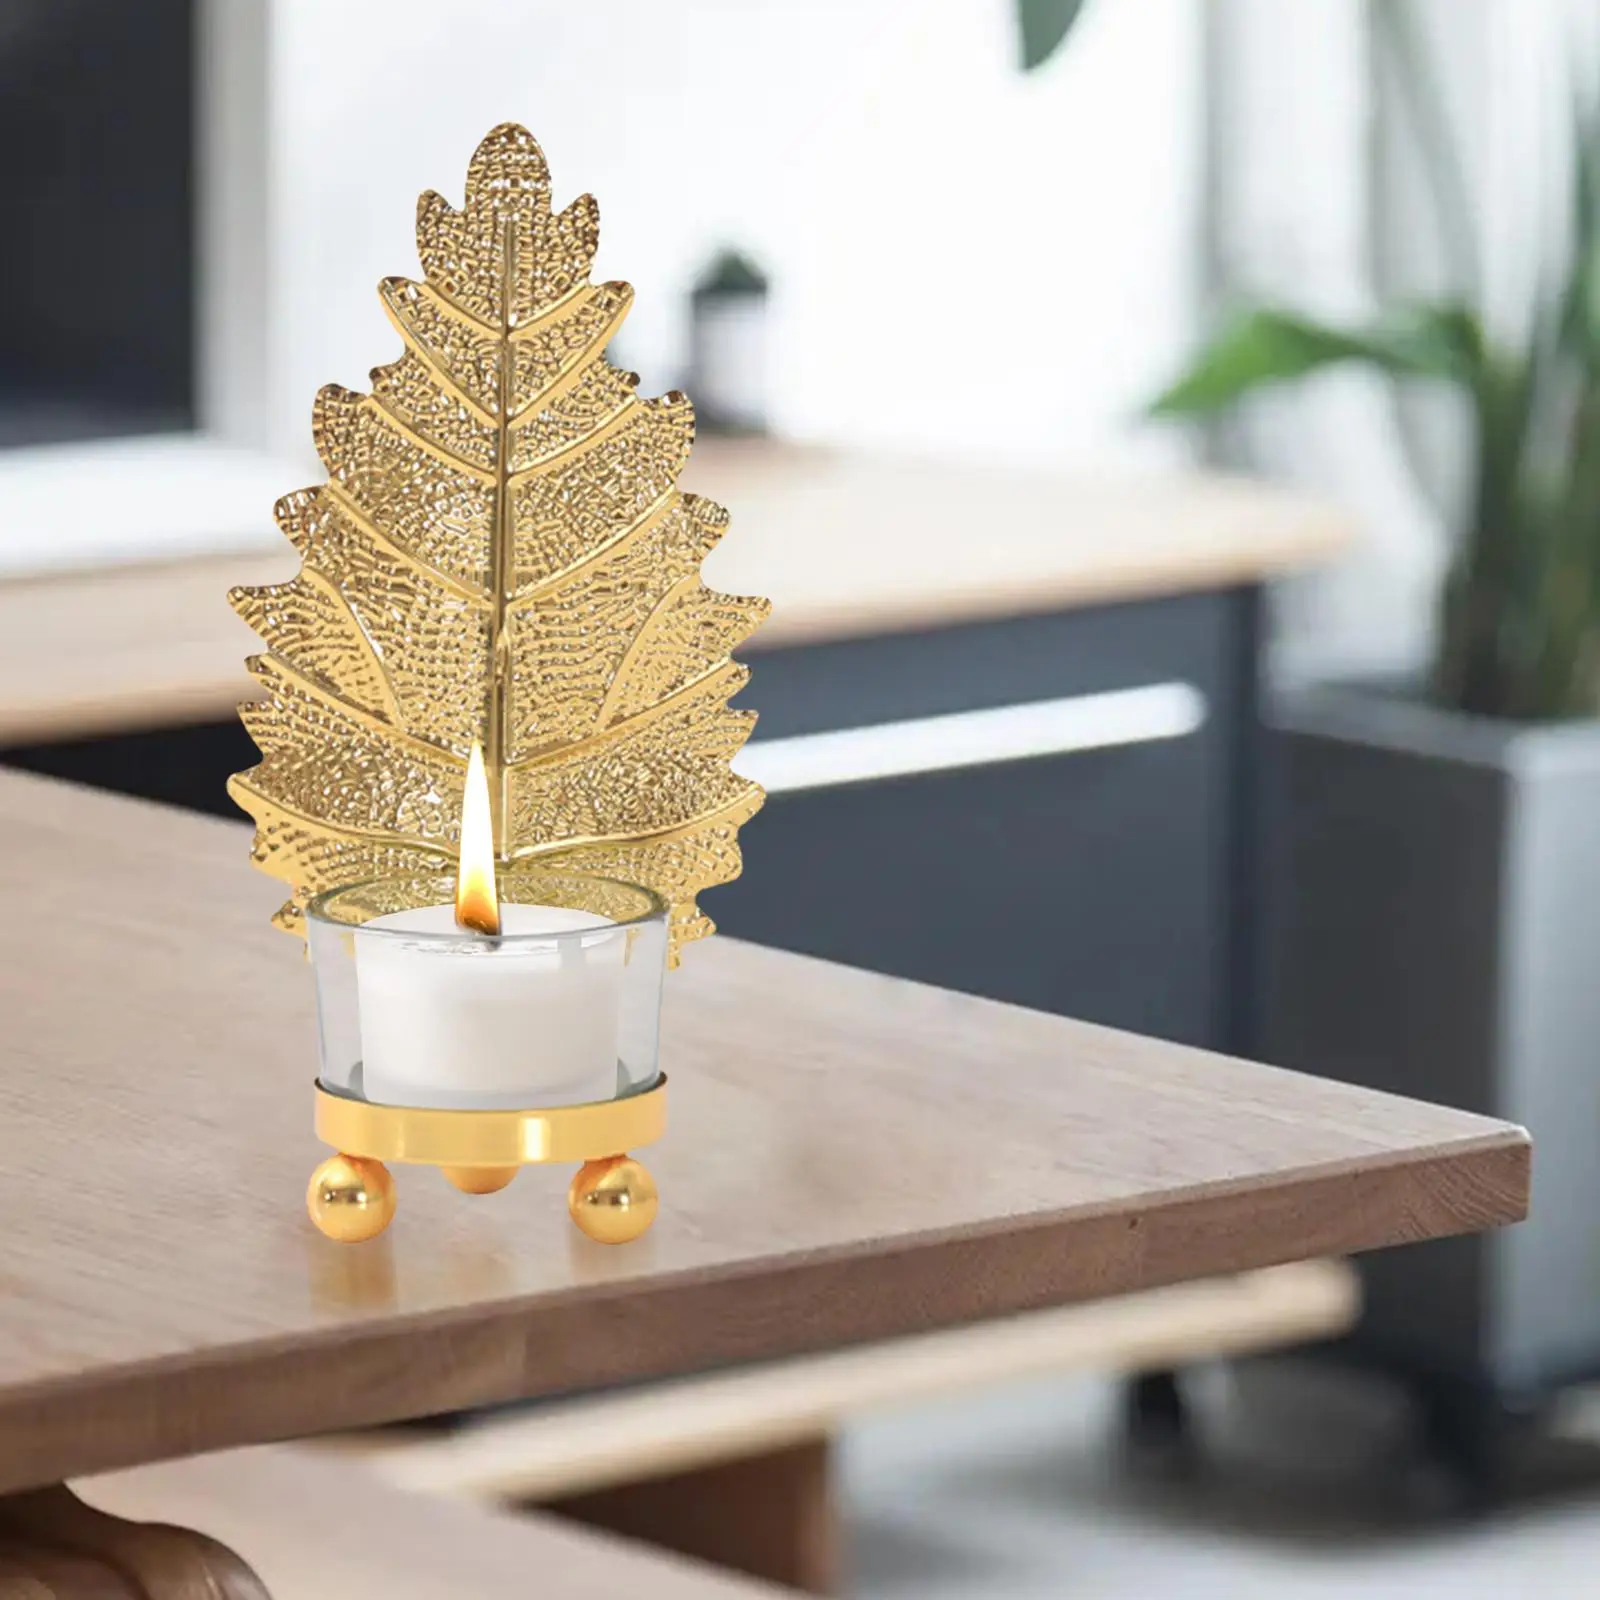 Leaf Design Candle Holder Stand Candlestick Stand for Restaurant Home Decor Ornament